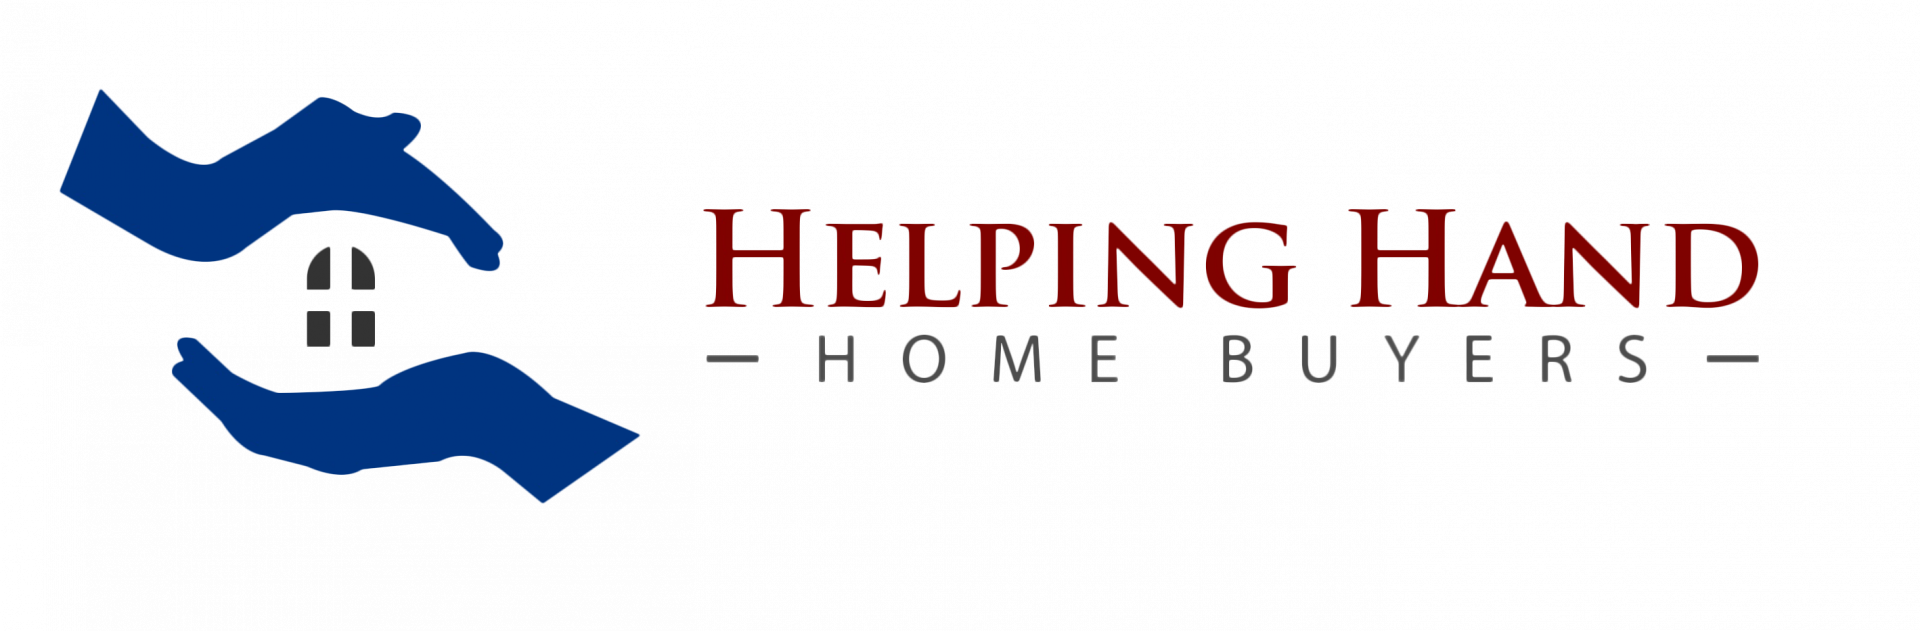 Helping Hand Home Buyers logo